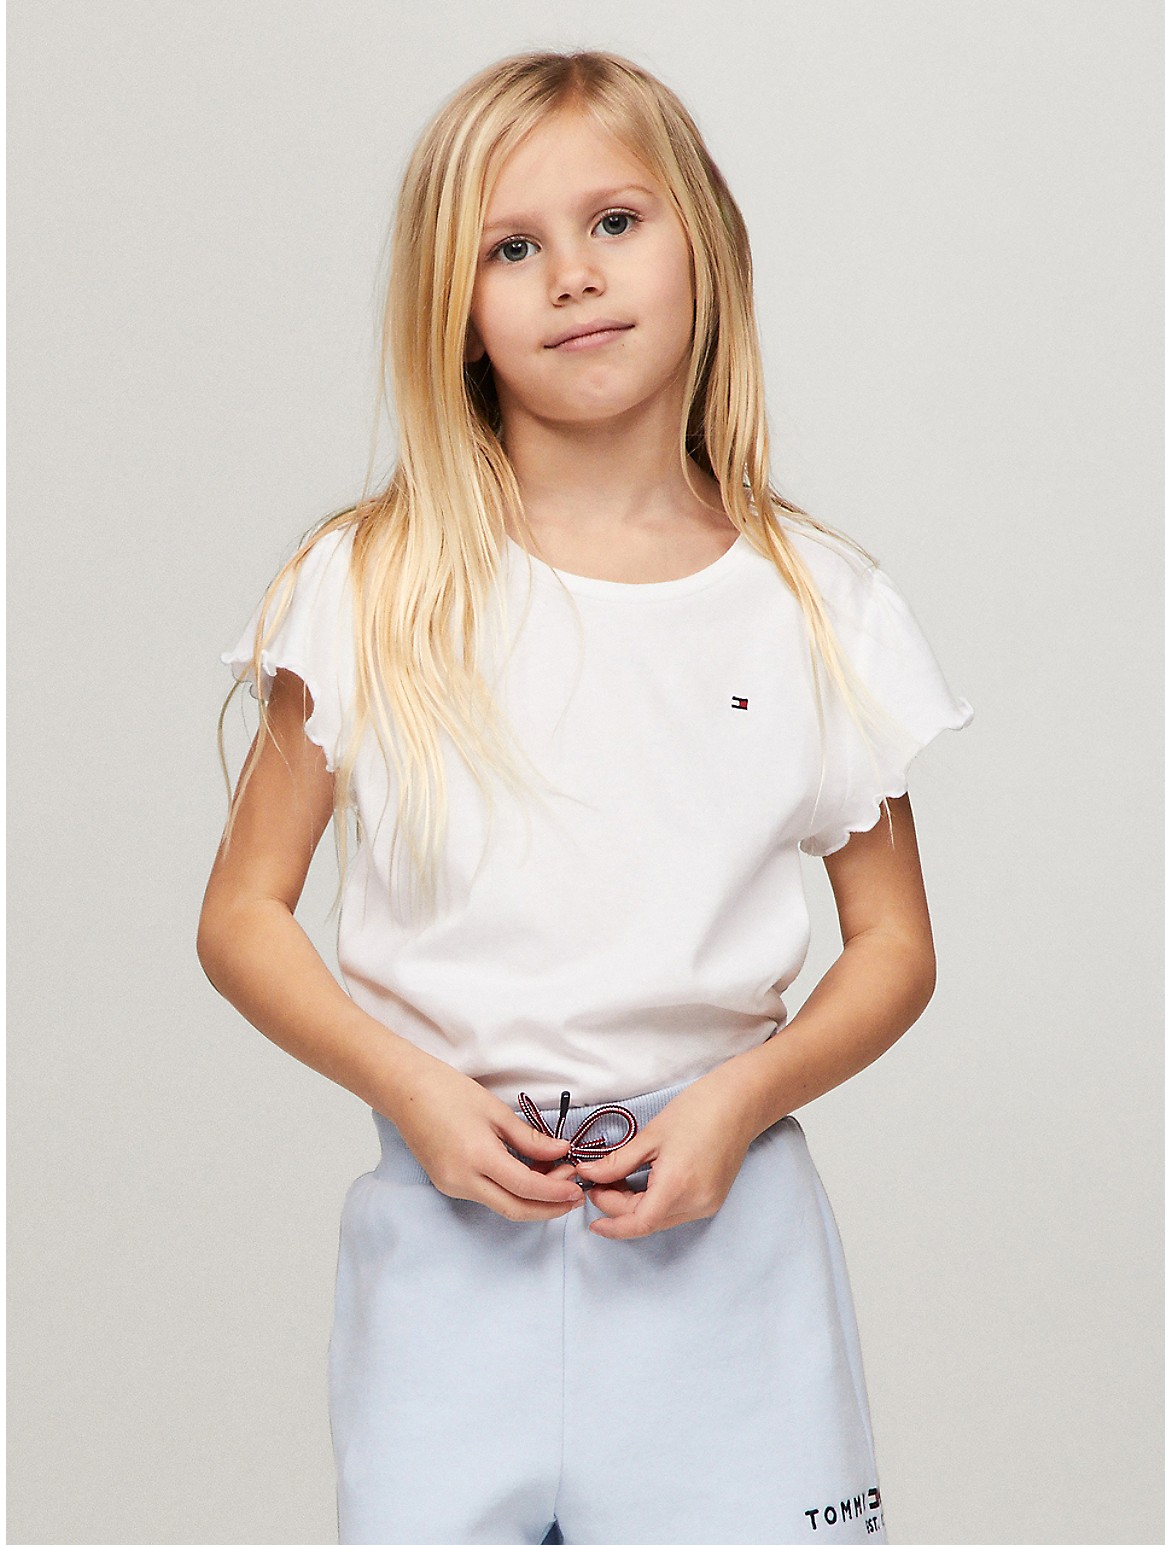 Tommy Hilfiger Girls' Kids' Ruffle Sleeve Top